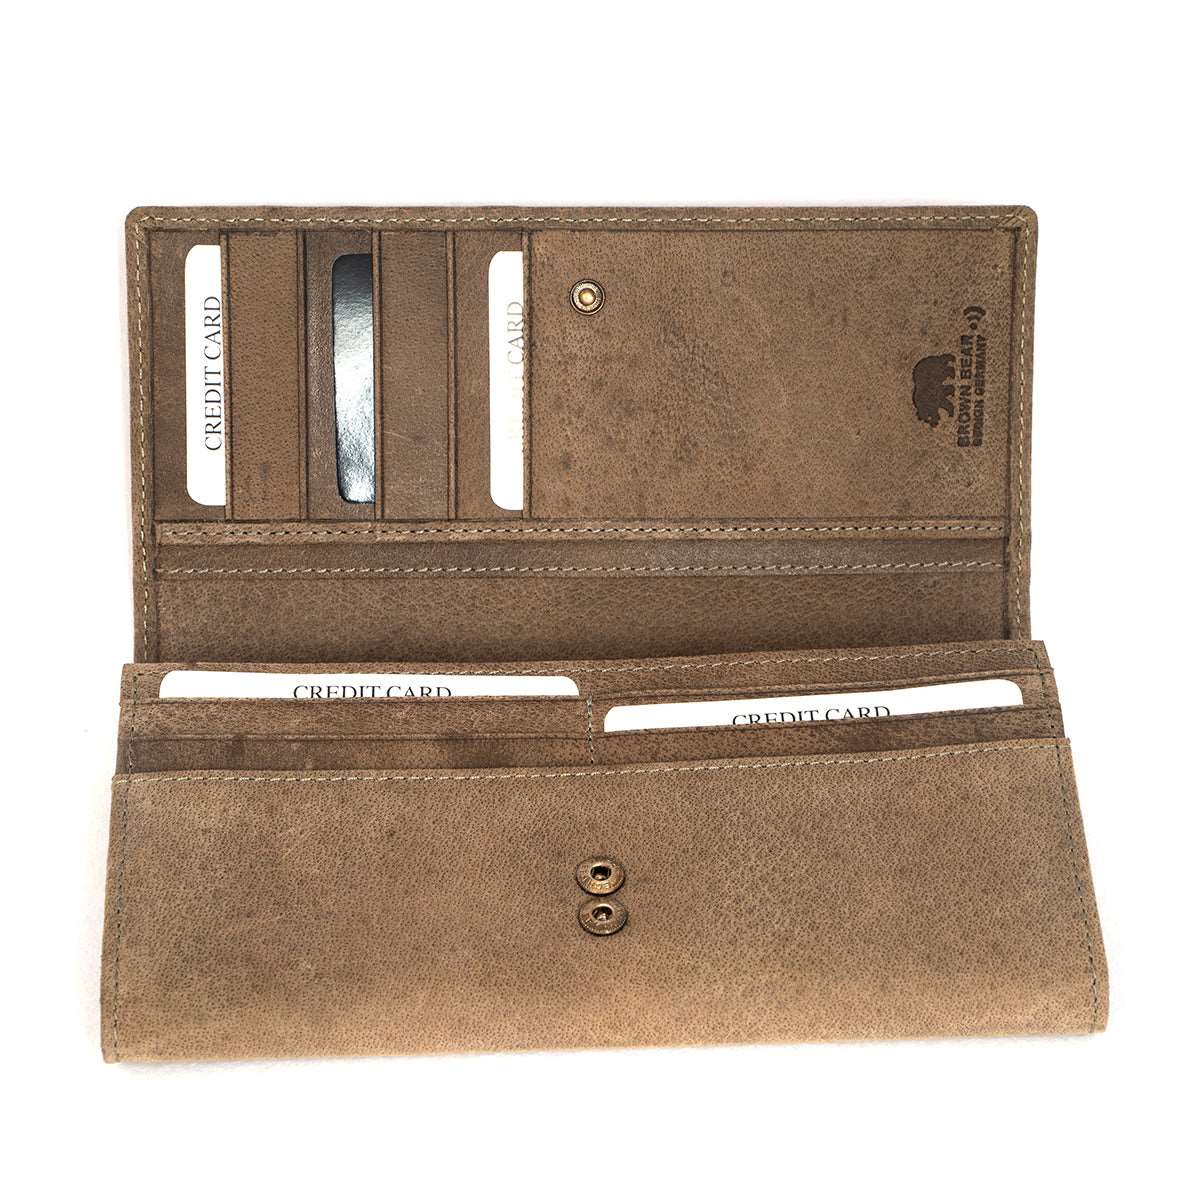 Ladies Wallet with Flap Closure in Genuine Leather - Brown Bear